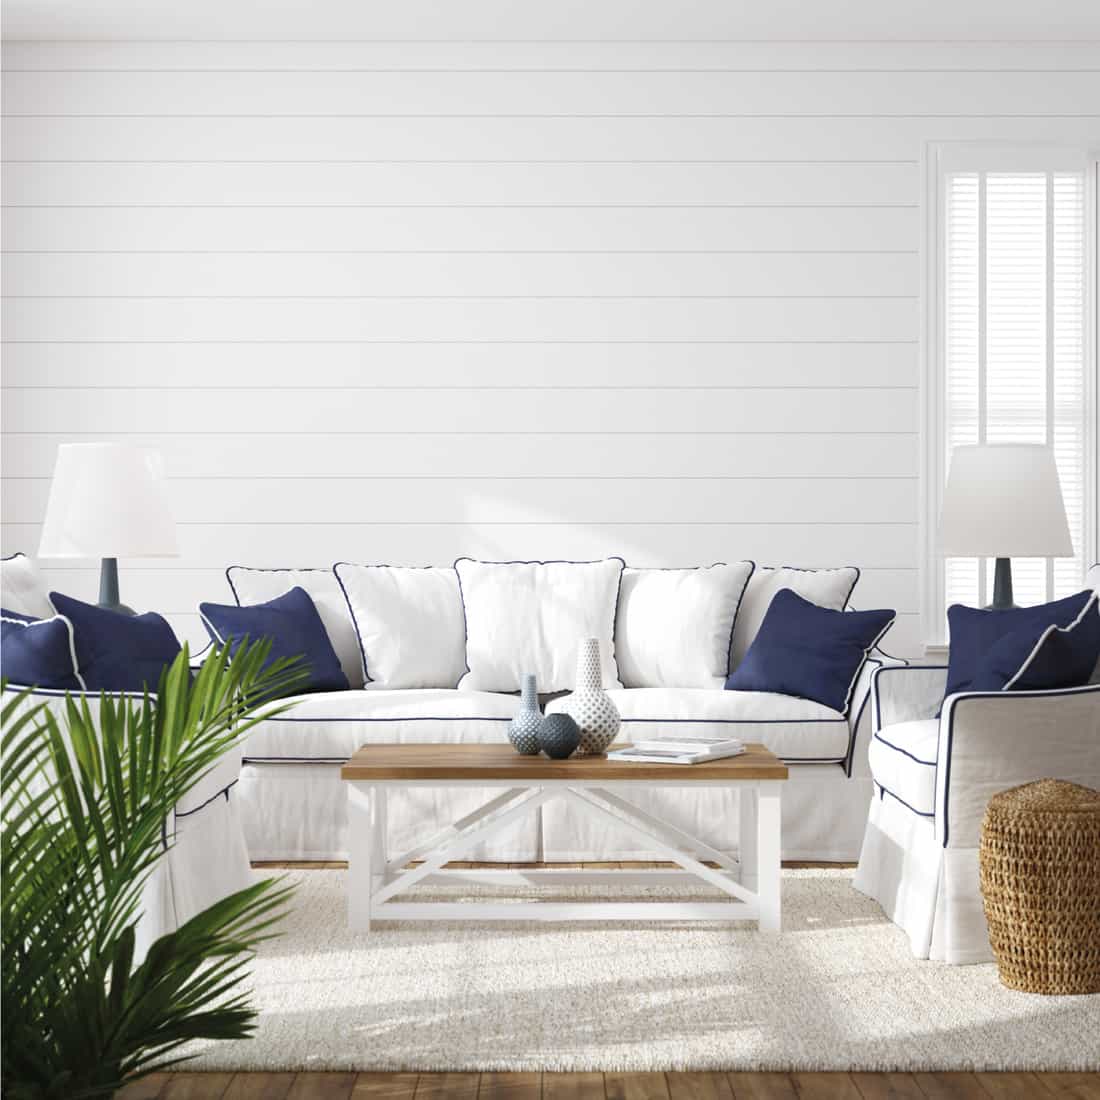 Hampton-style living room interior, C shaped seating